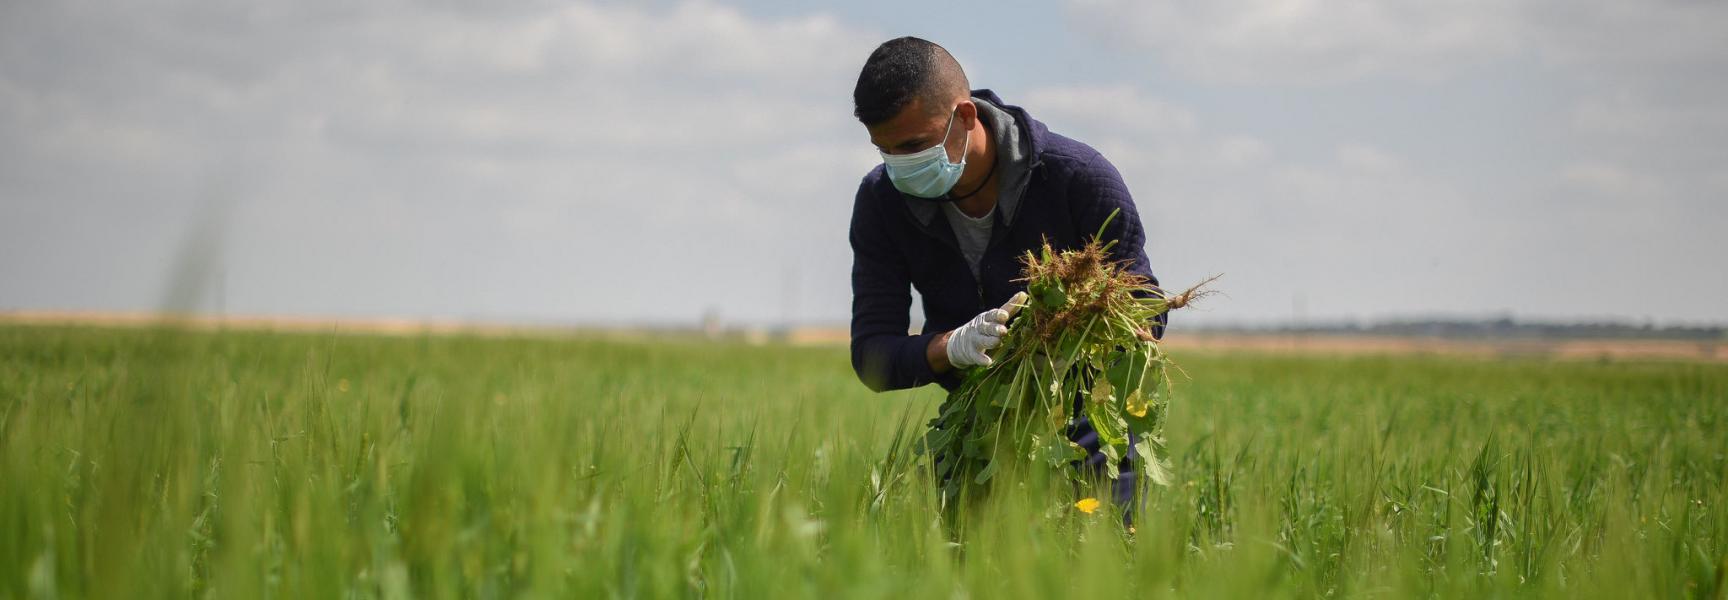 Farmer in the field in Palestine (State of)